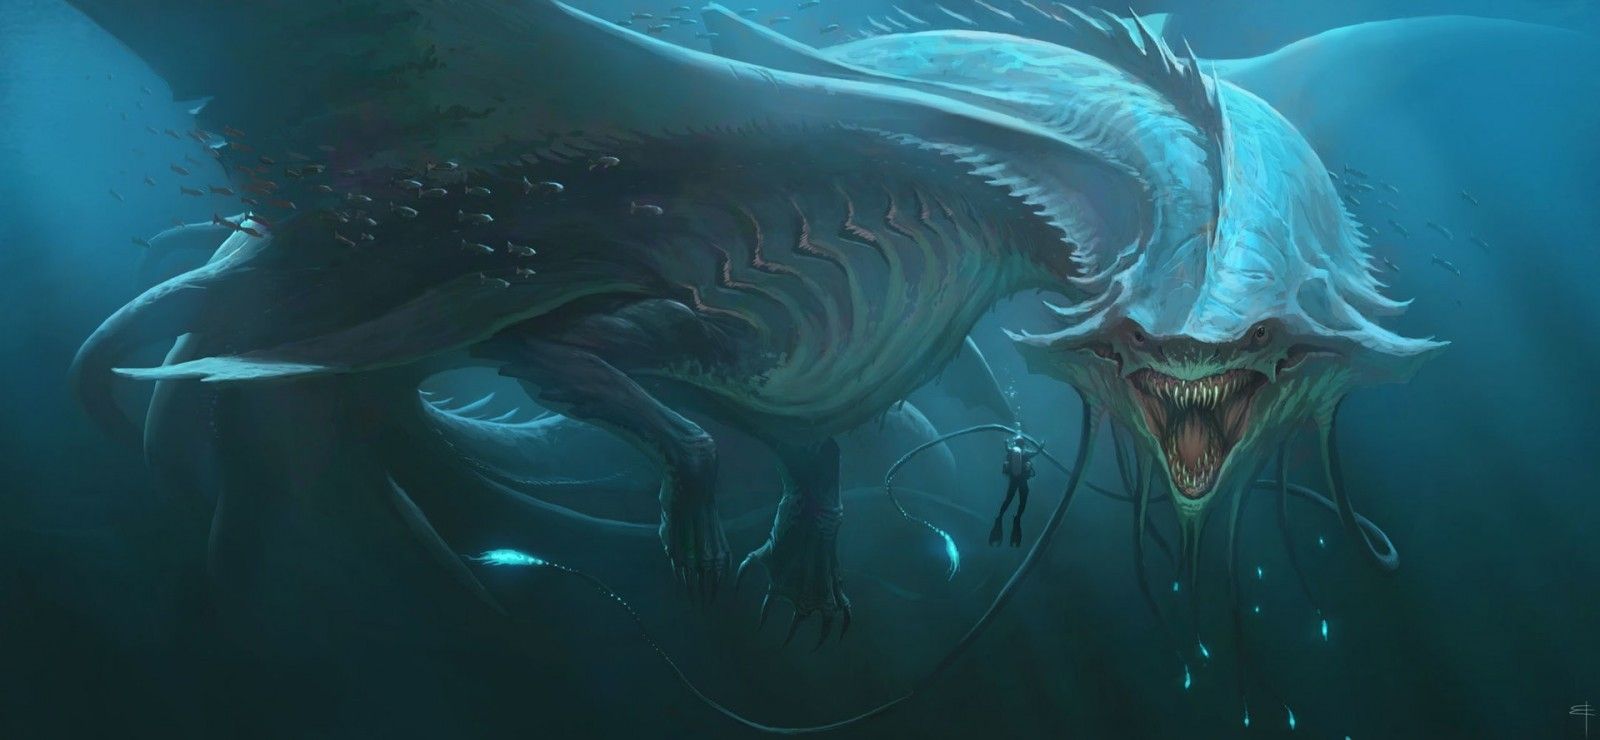 Sea Monster Wallpaper Background. Sea monsters, Fantasy creatures, Blue dragon